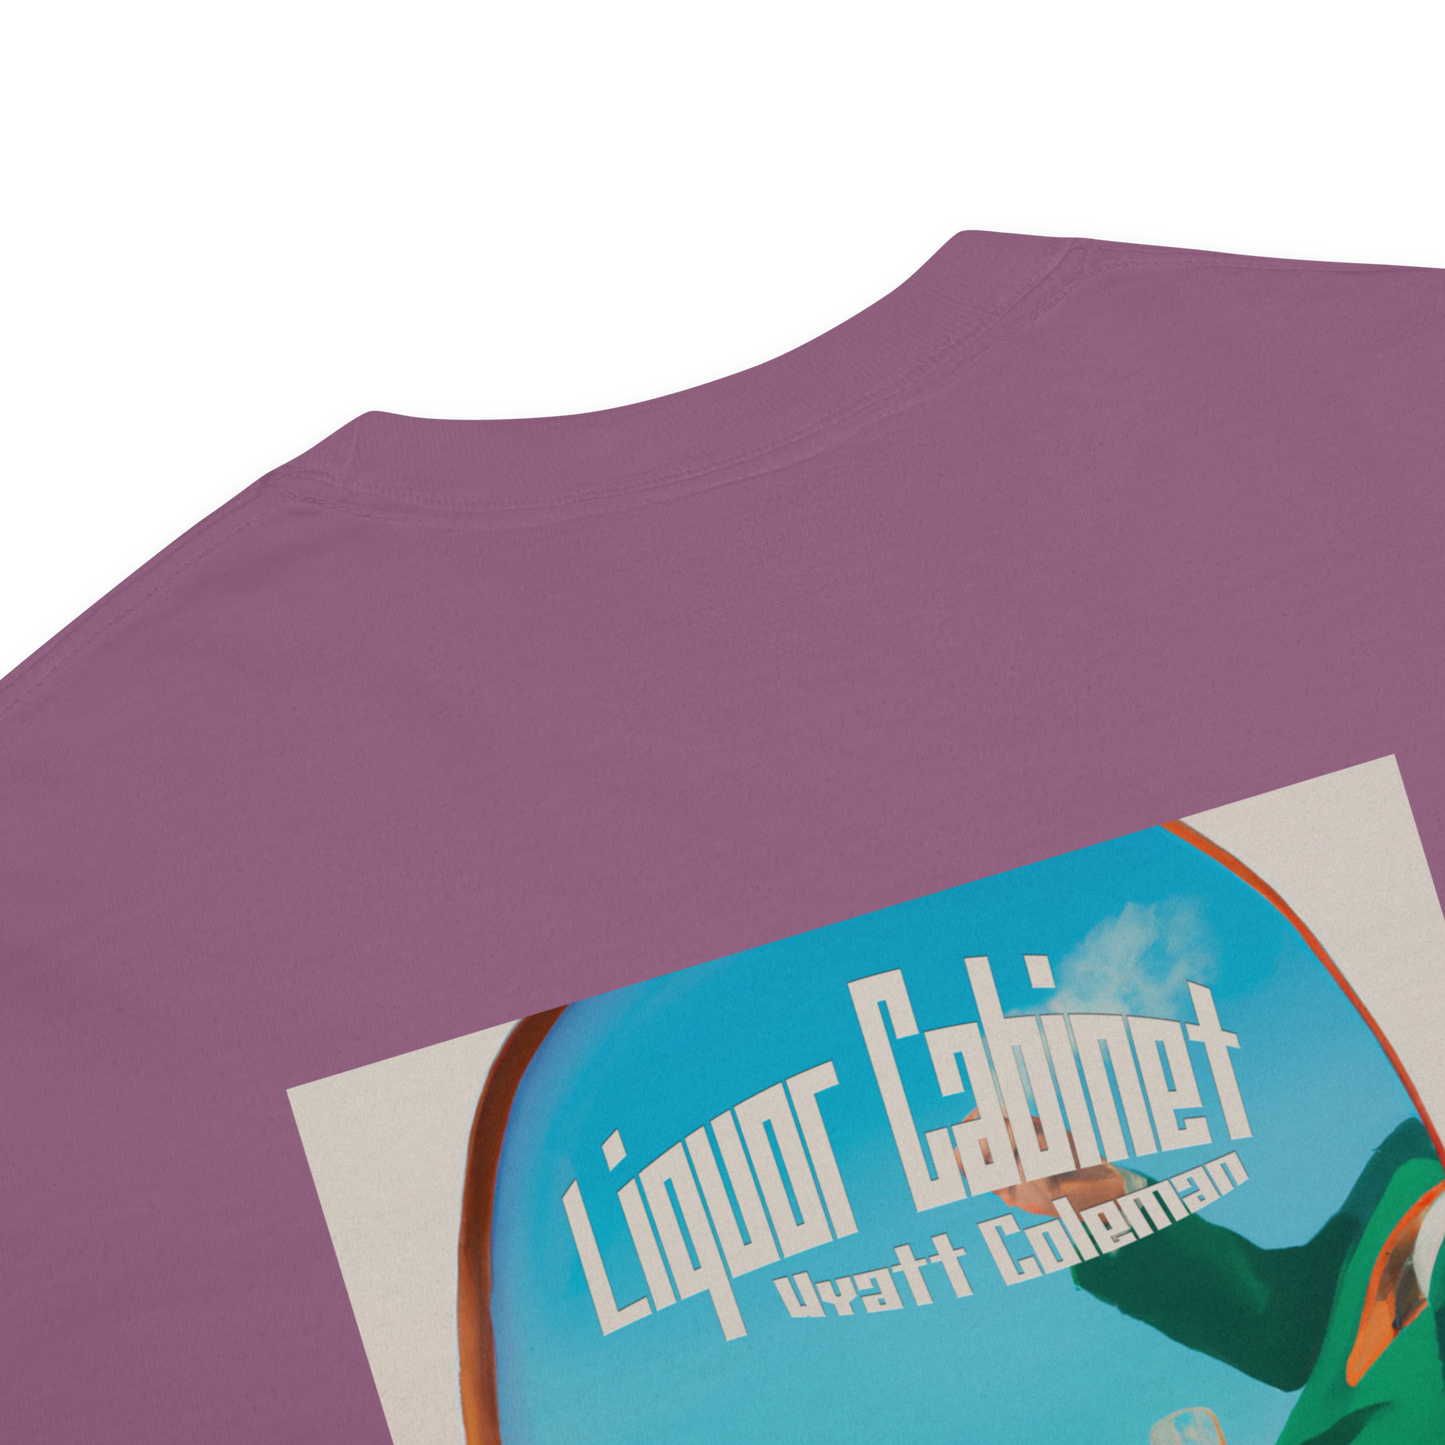 Liquor Cabinet t-shirt